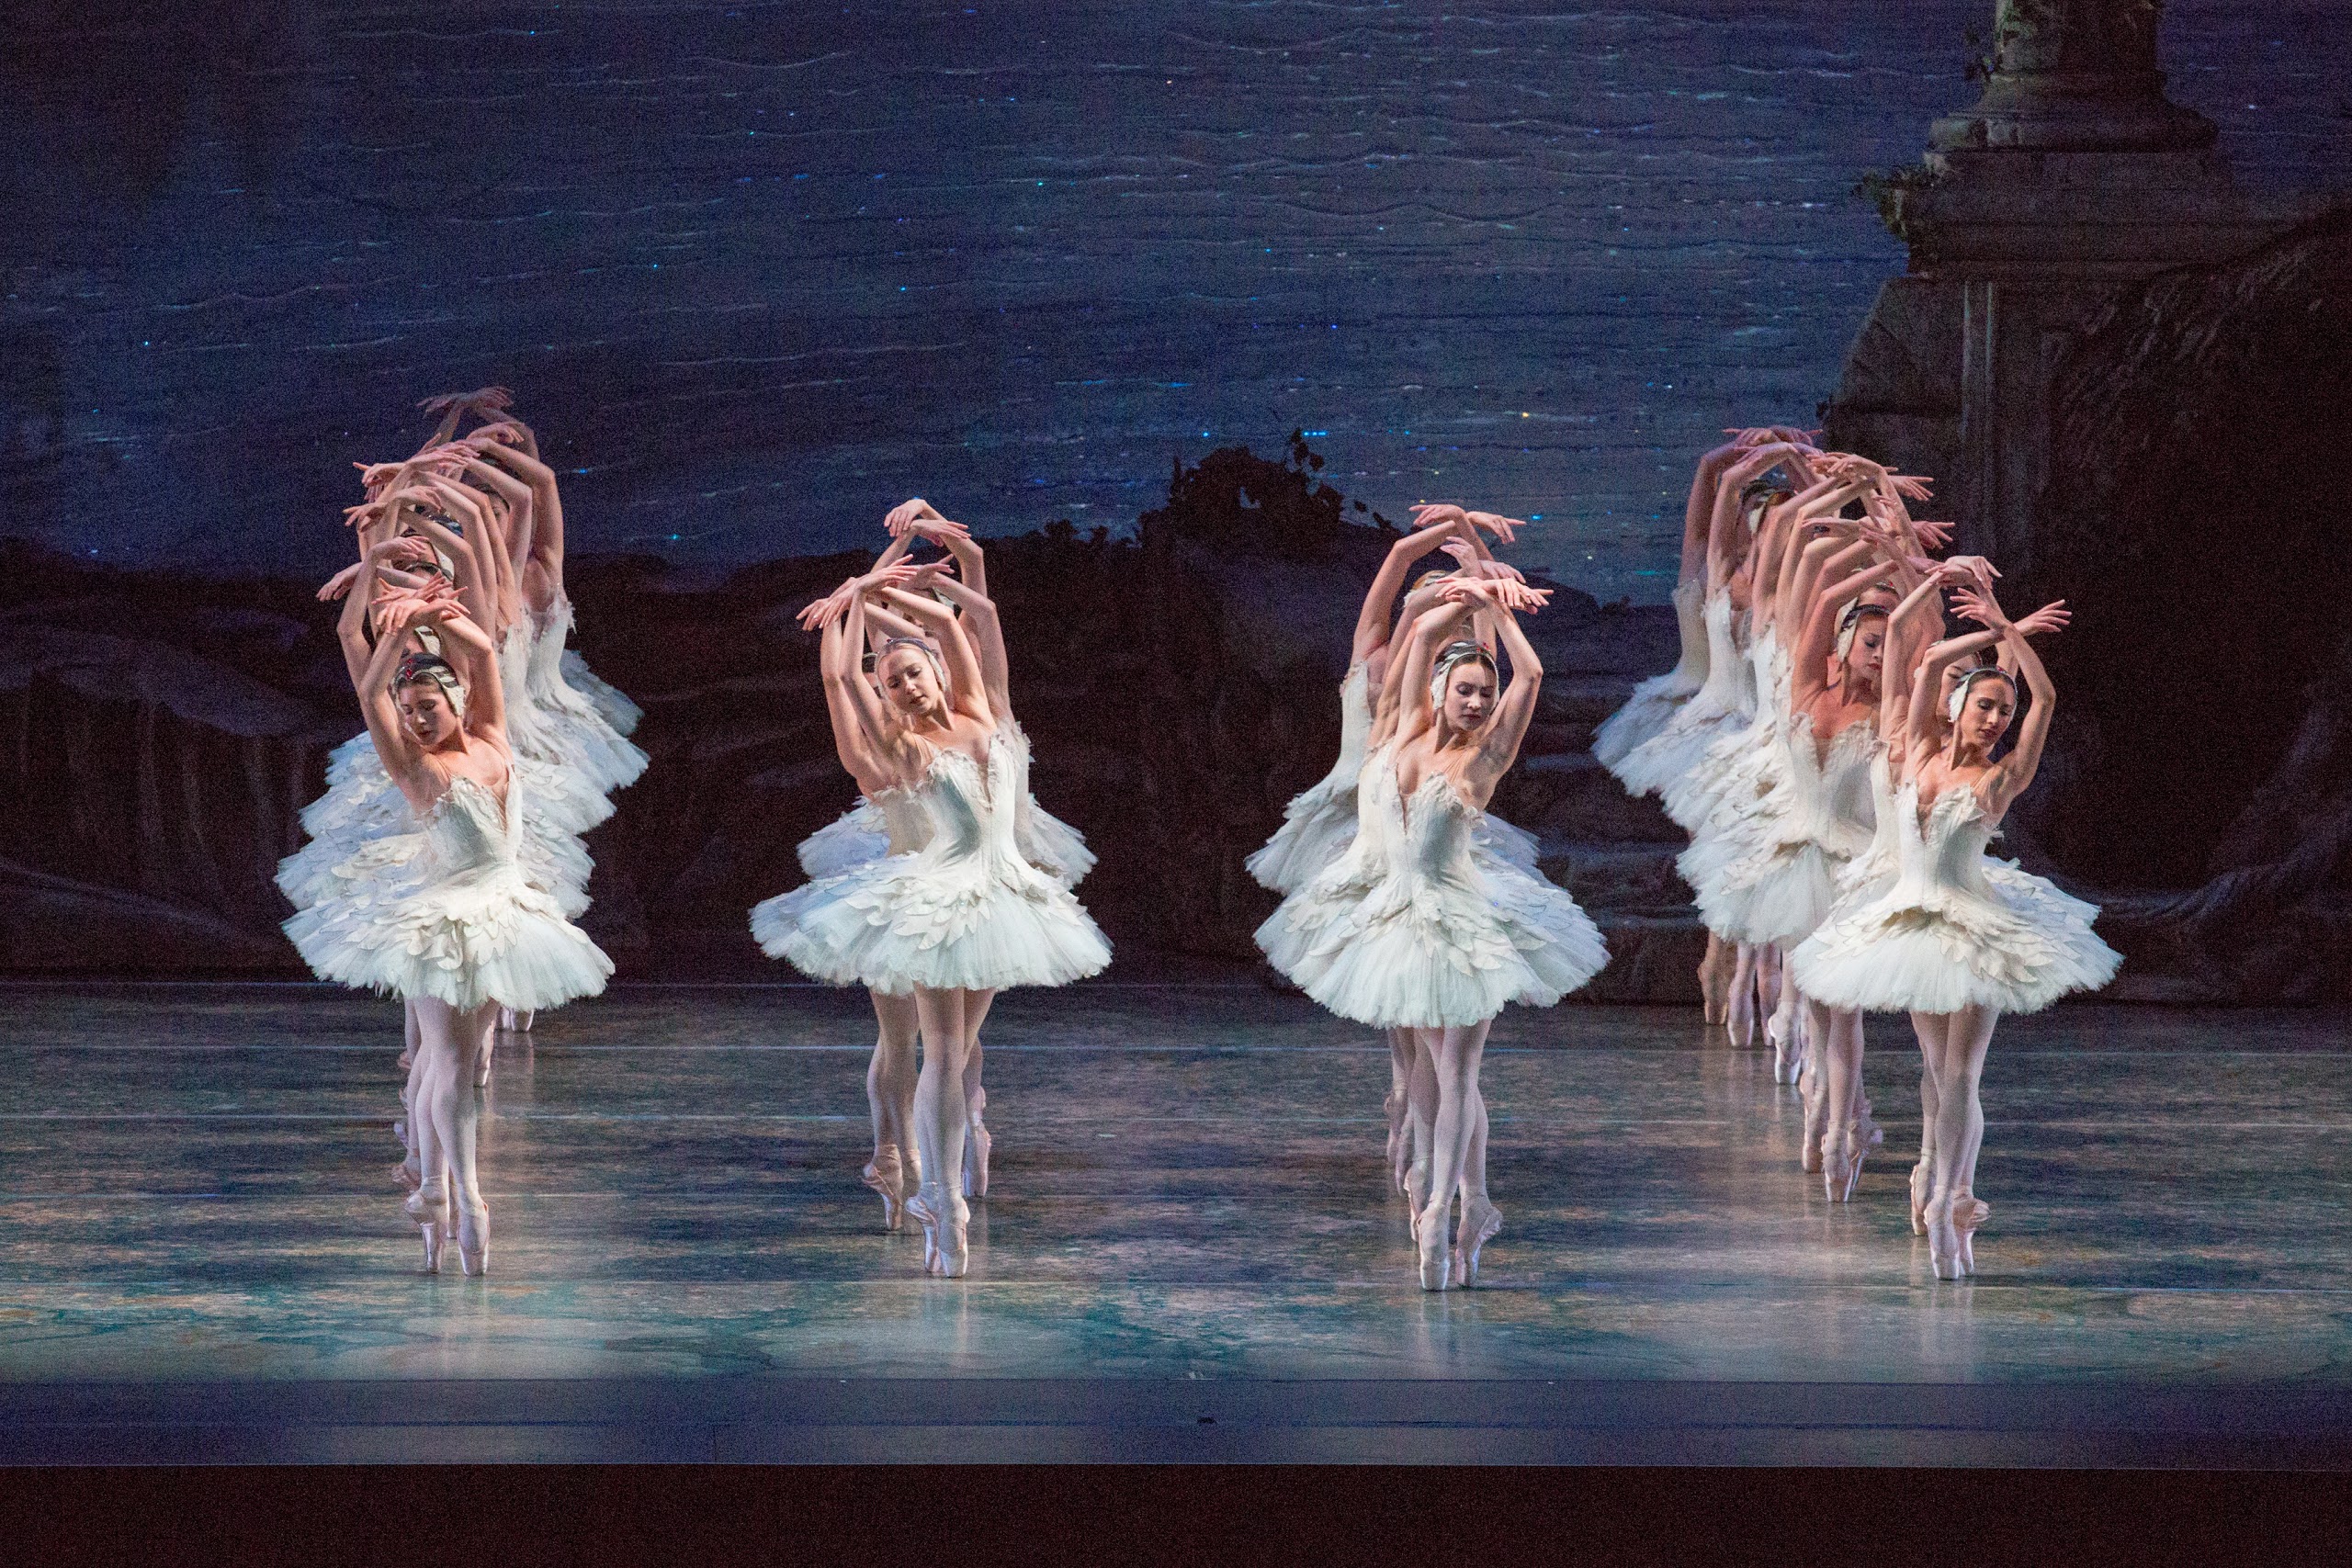 american ballet theatre swan lake review